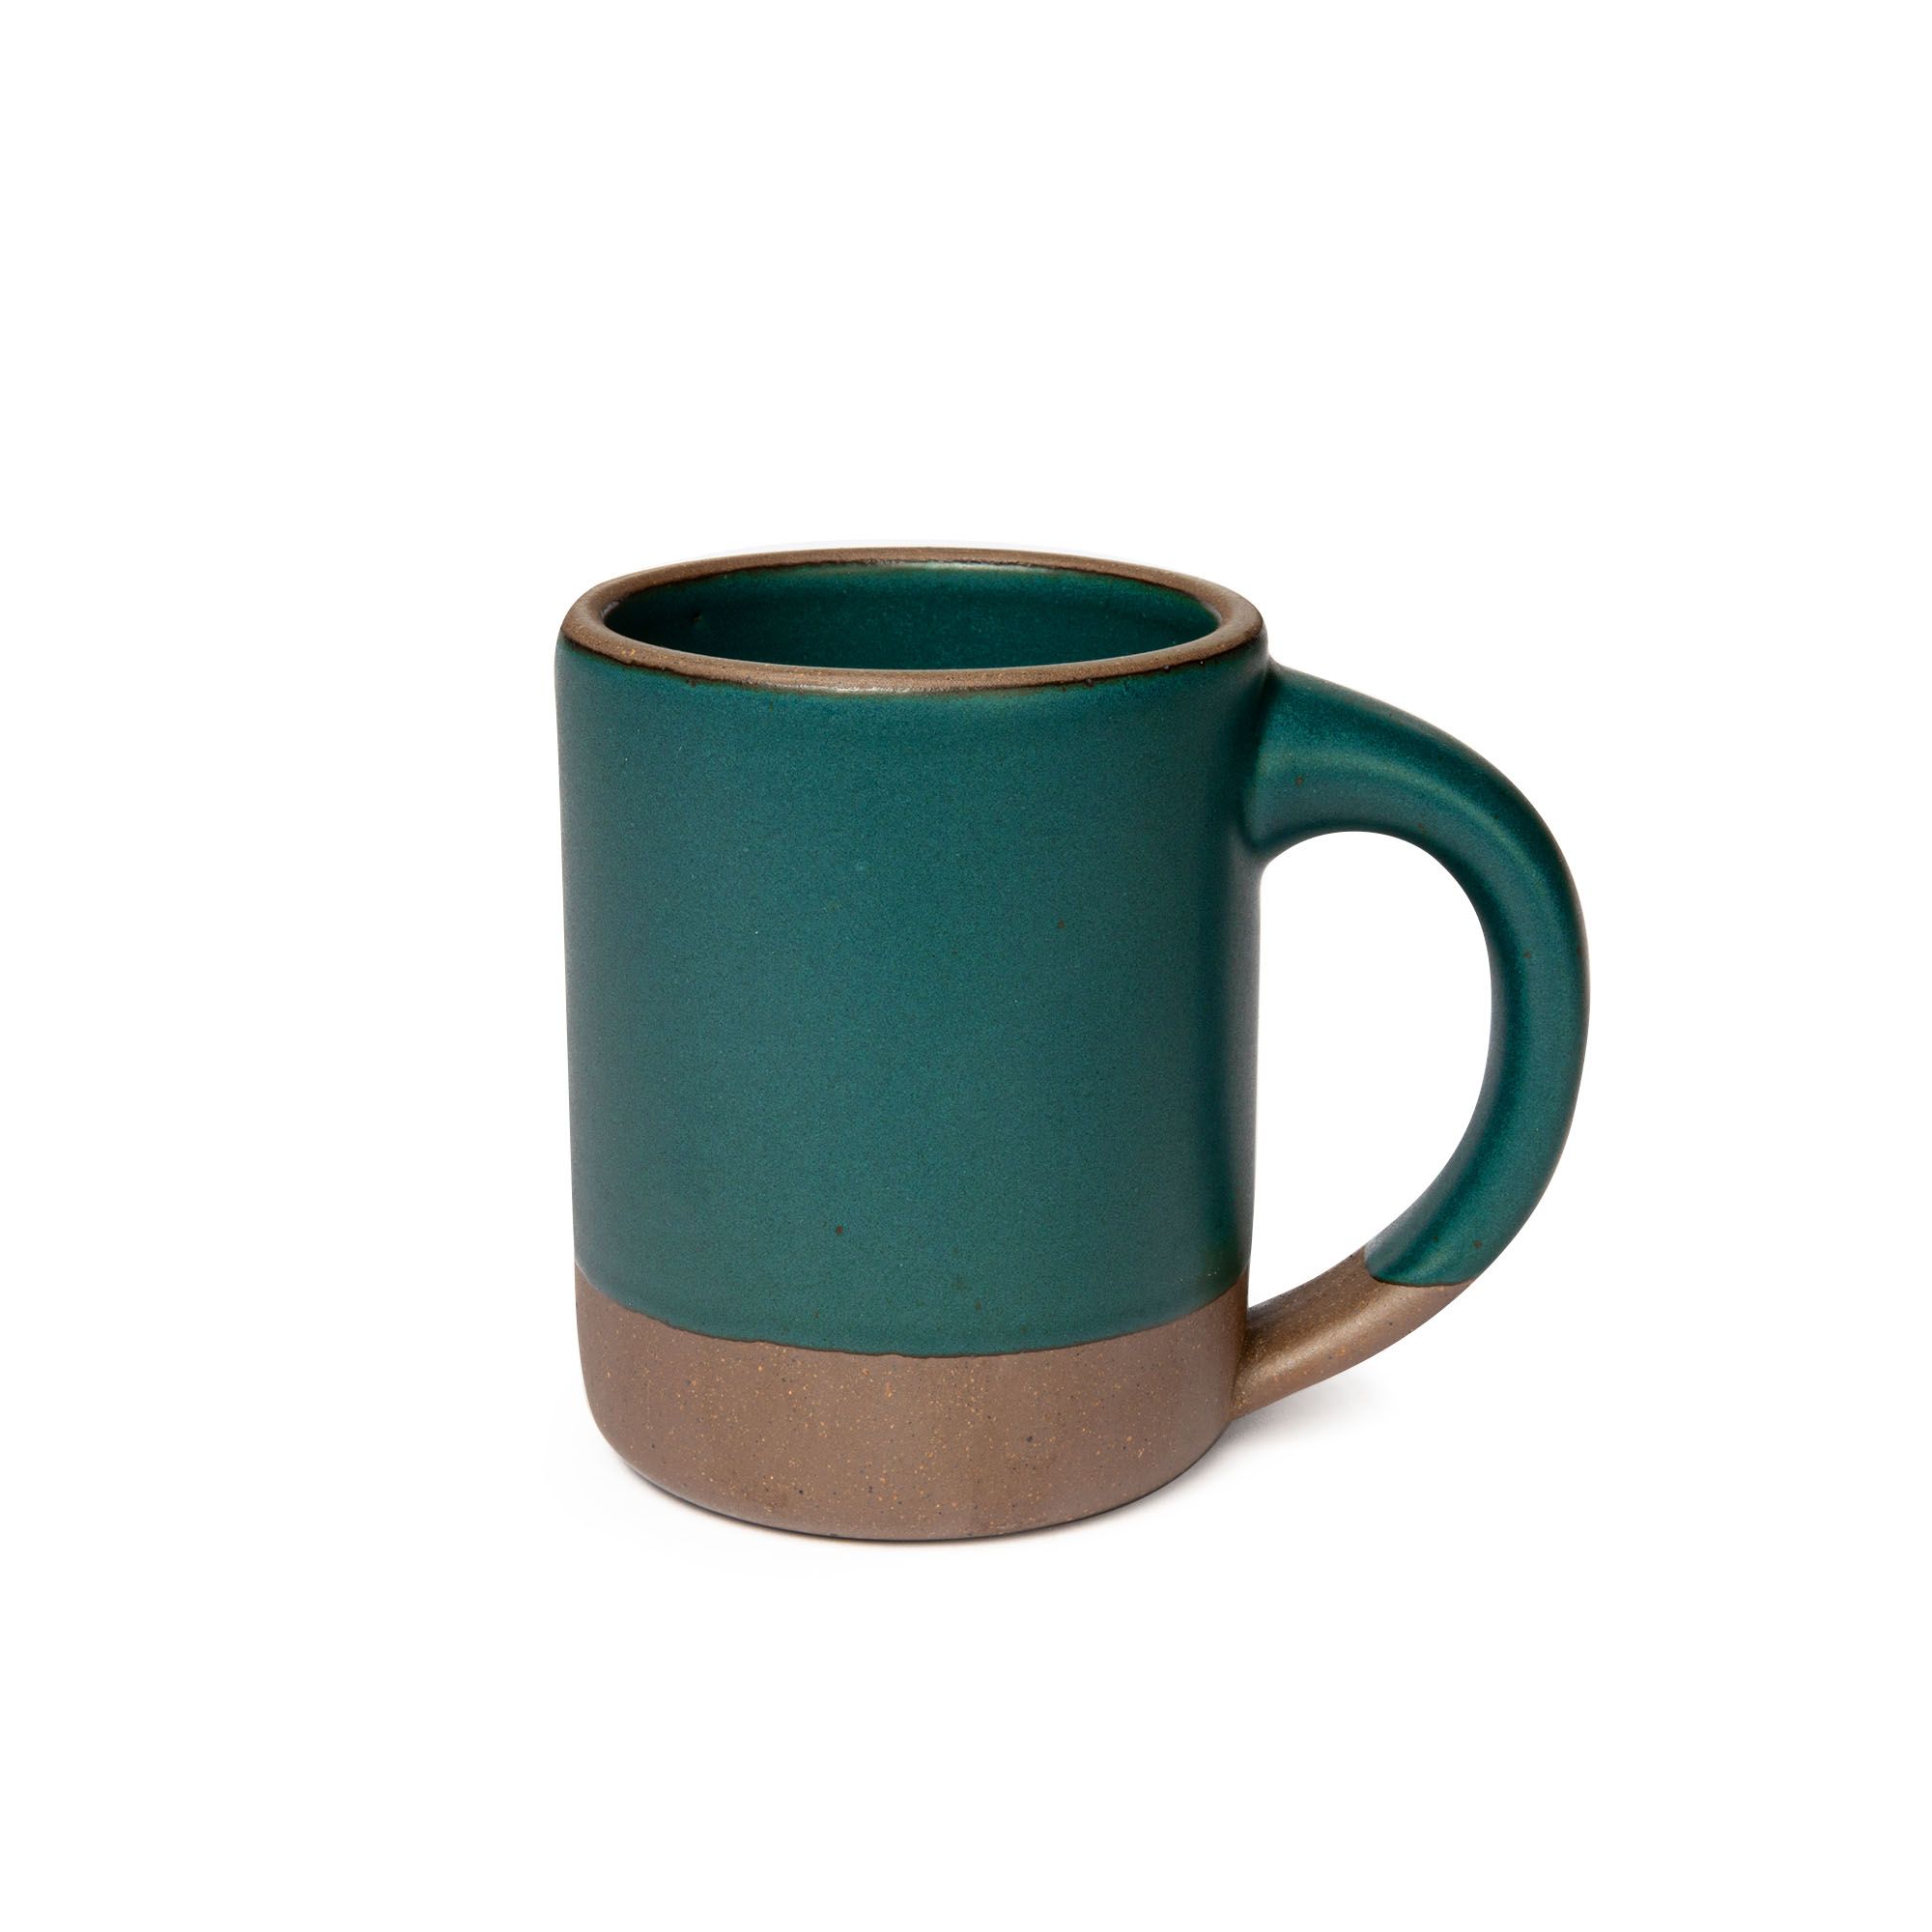 Big Mug, Ceramic Mug